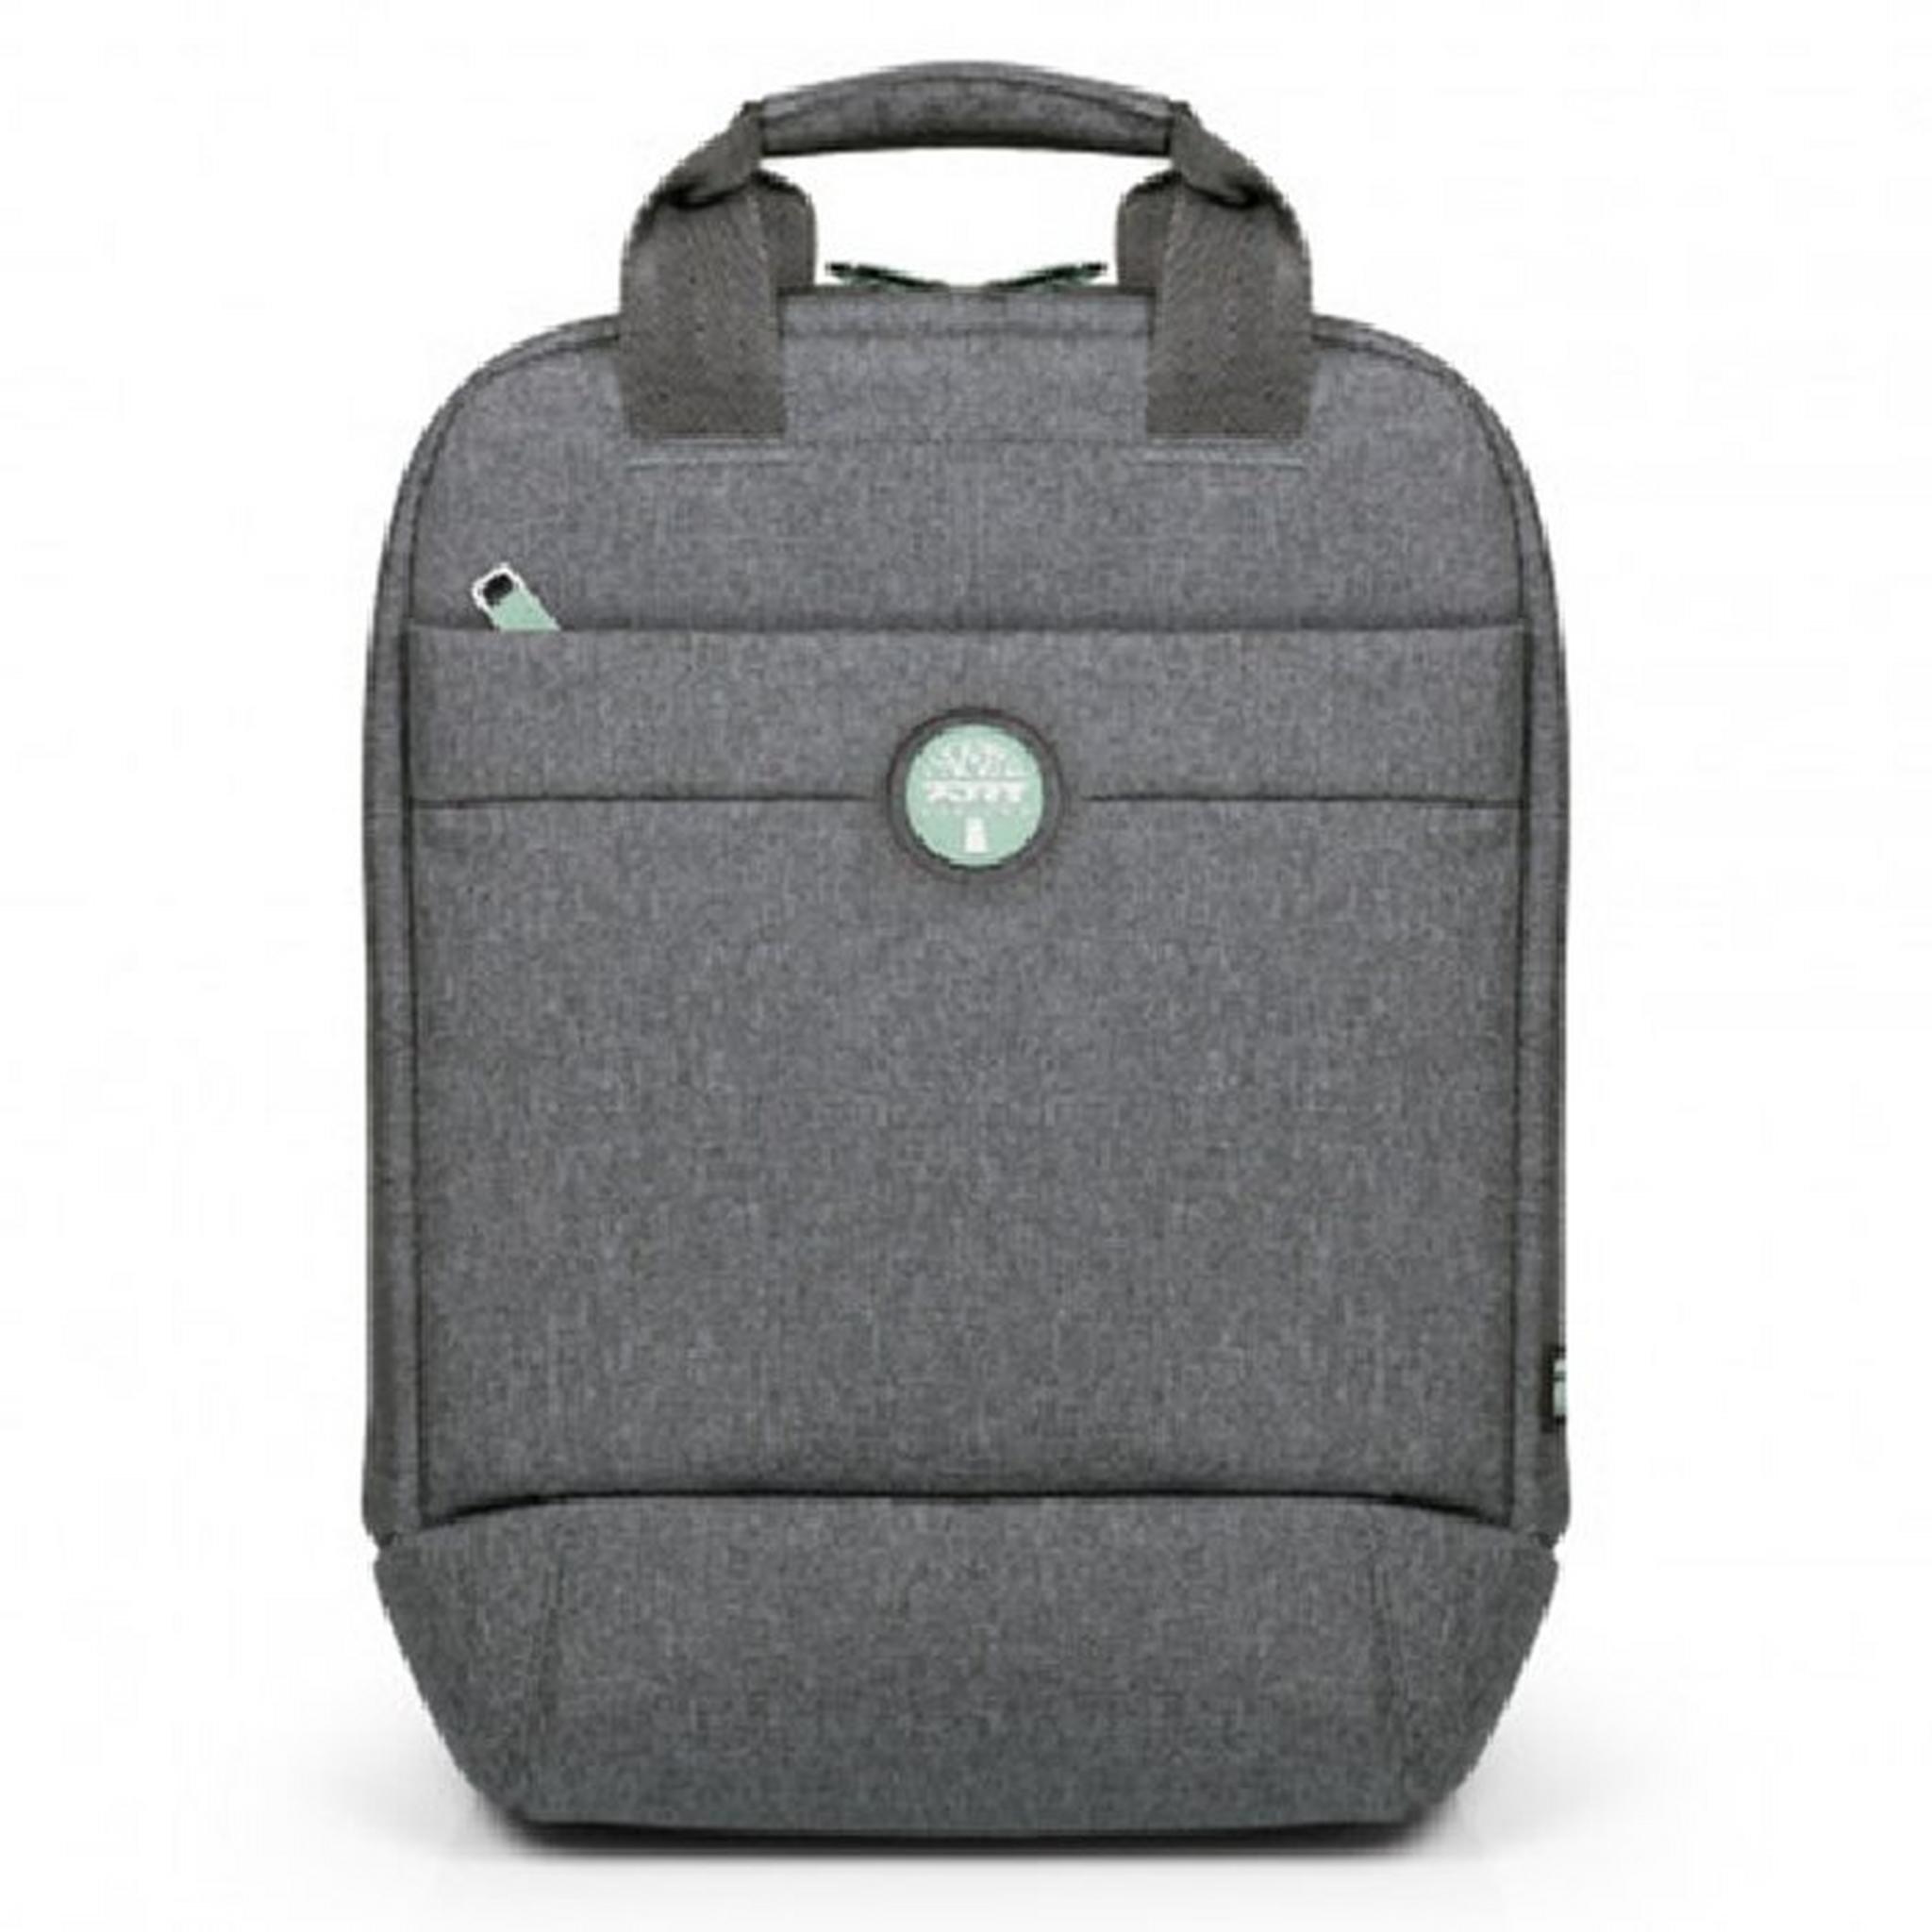 Port Yosemite Eco Backpack, 13-14 inch, 400704- Grey